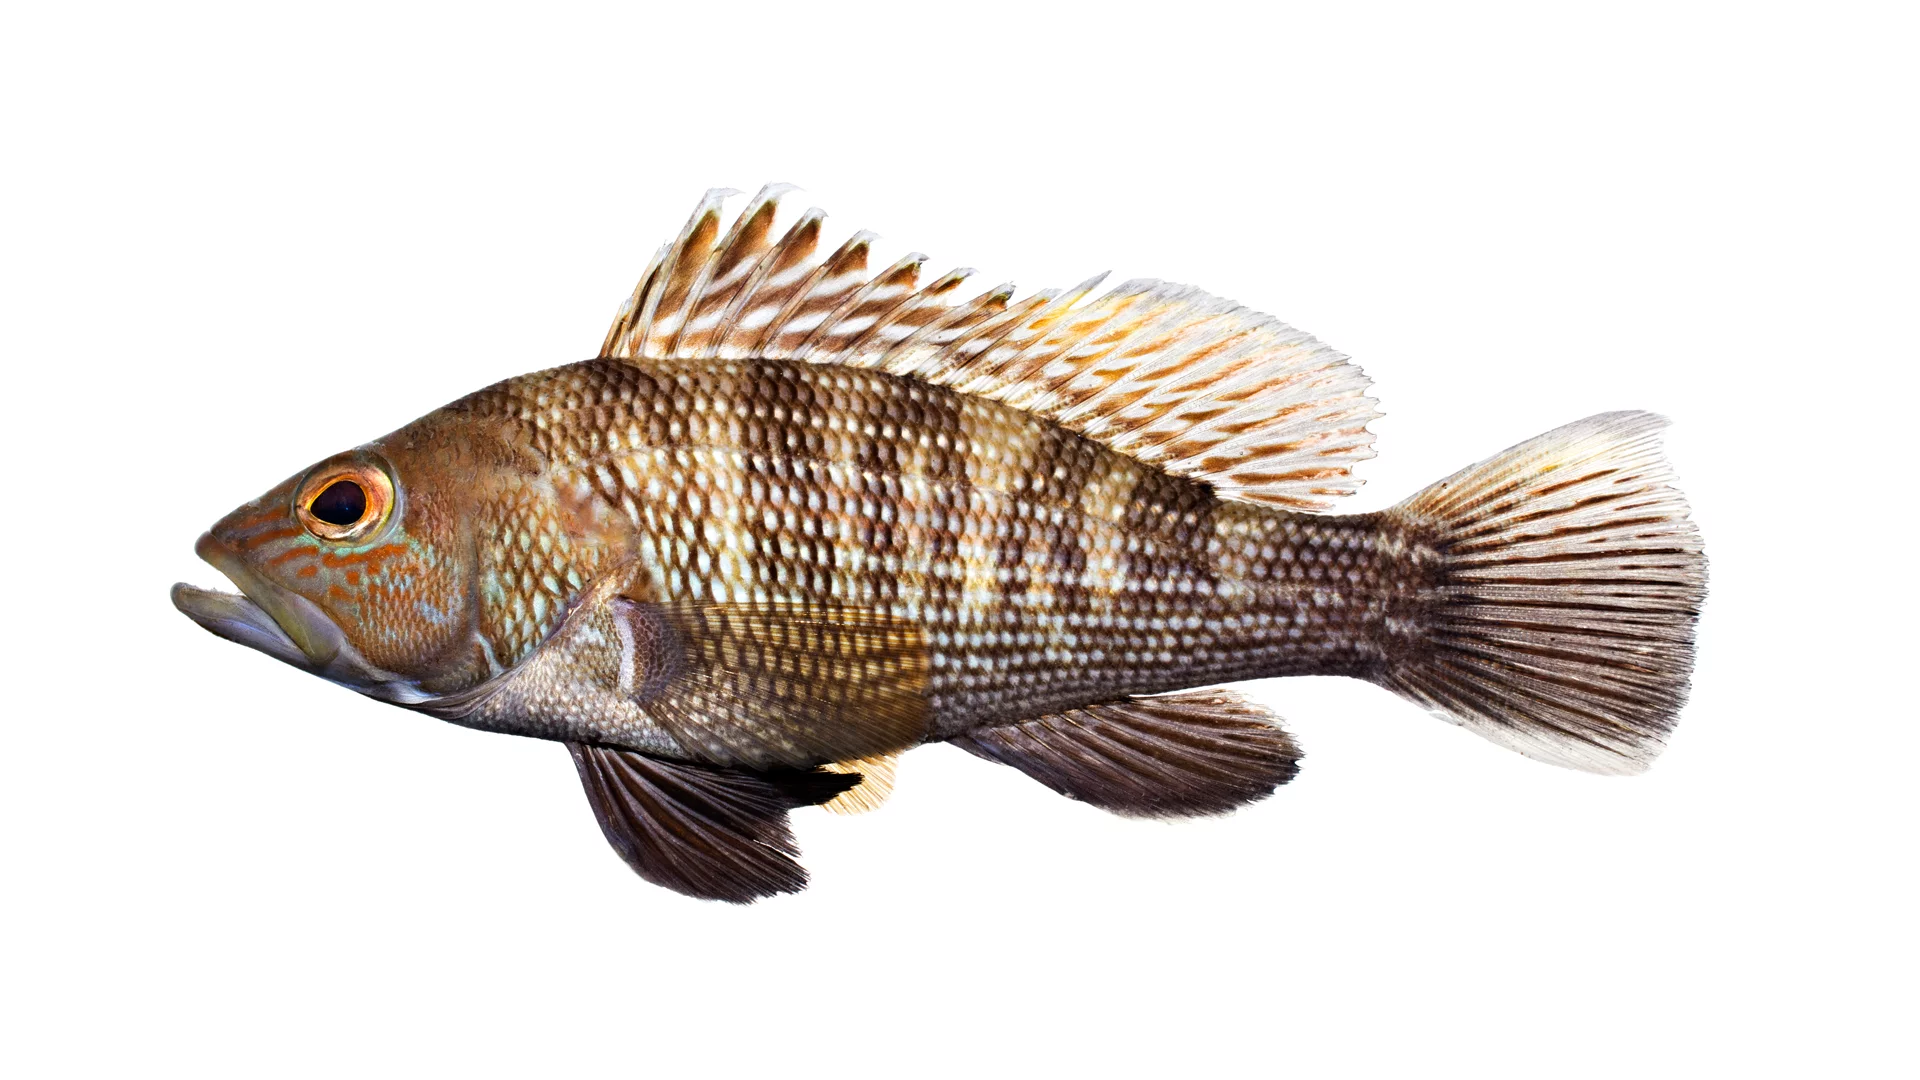 White Seabass Fish Through the Seasons